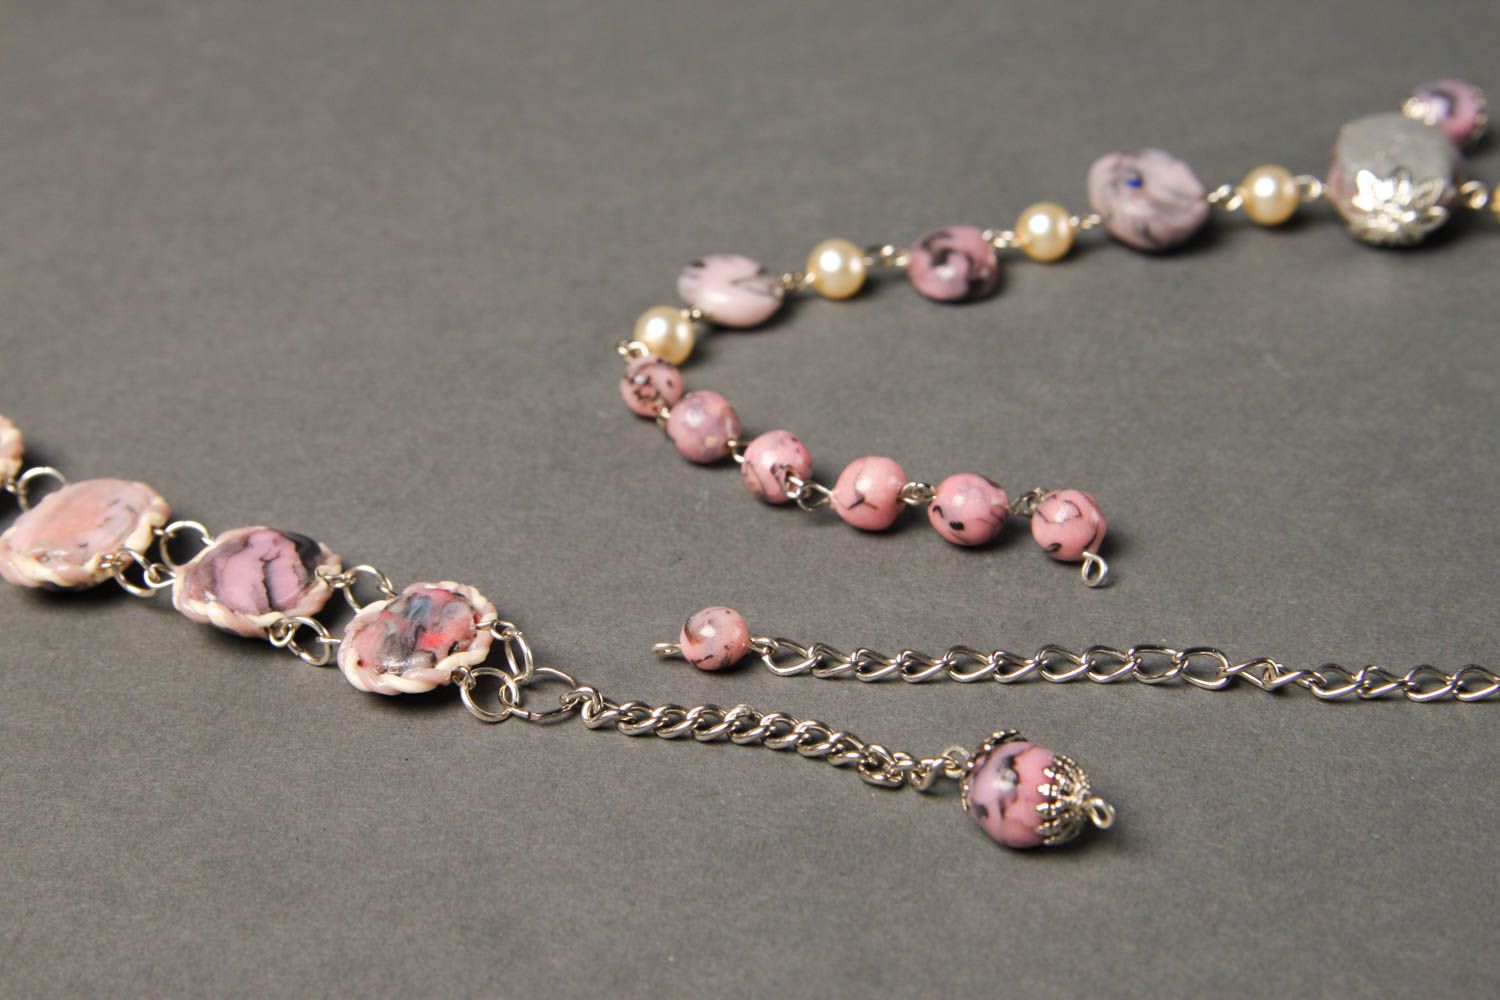 Unusual handmade plastic necklace bracelet designs cool jewelry set ideas photo 5